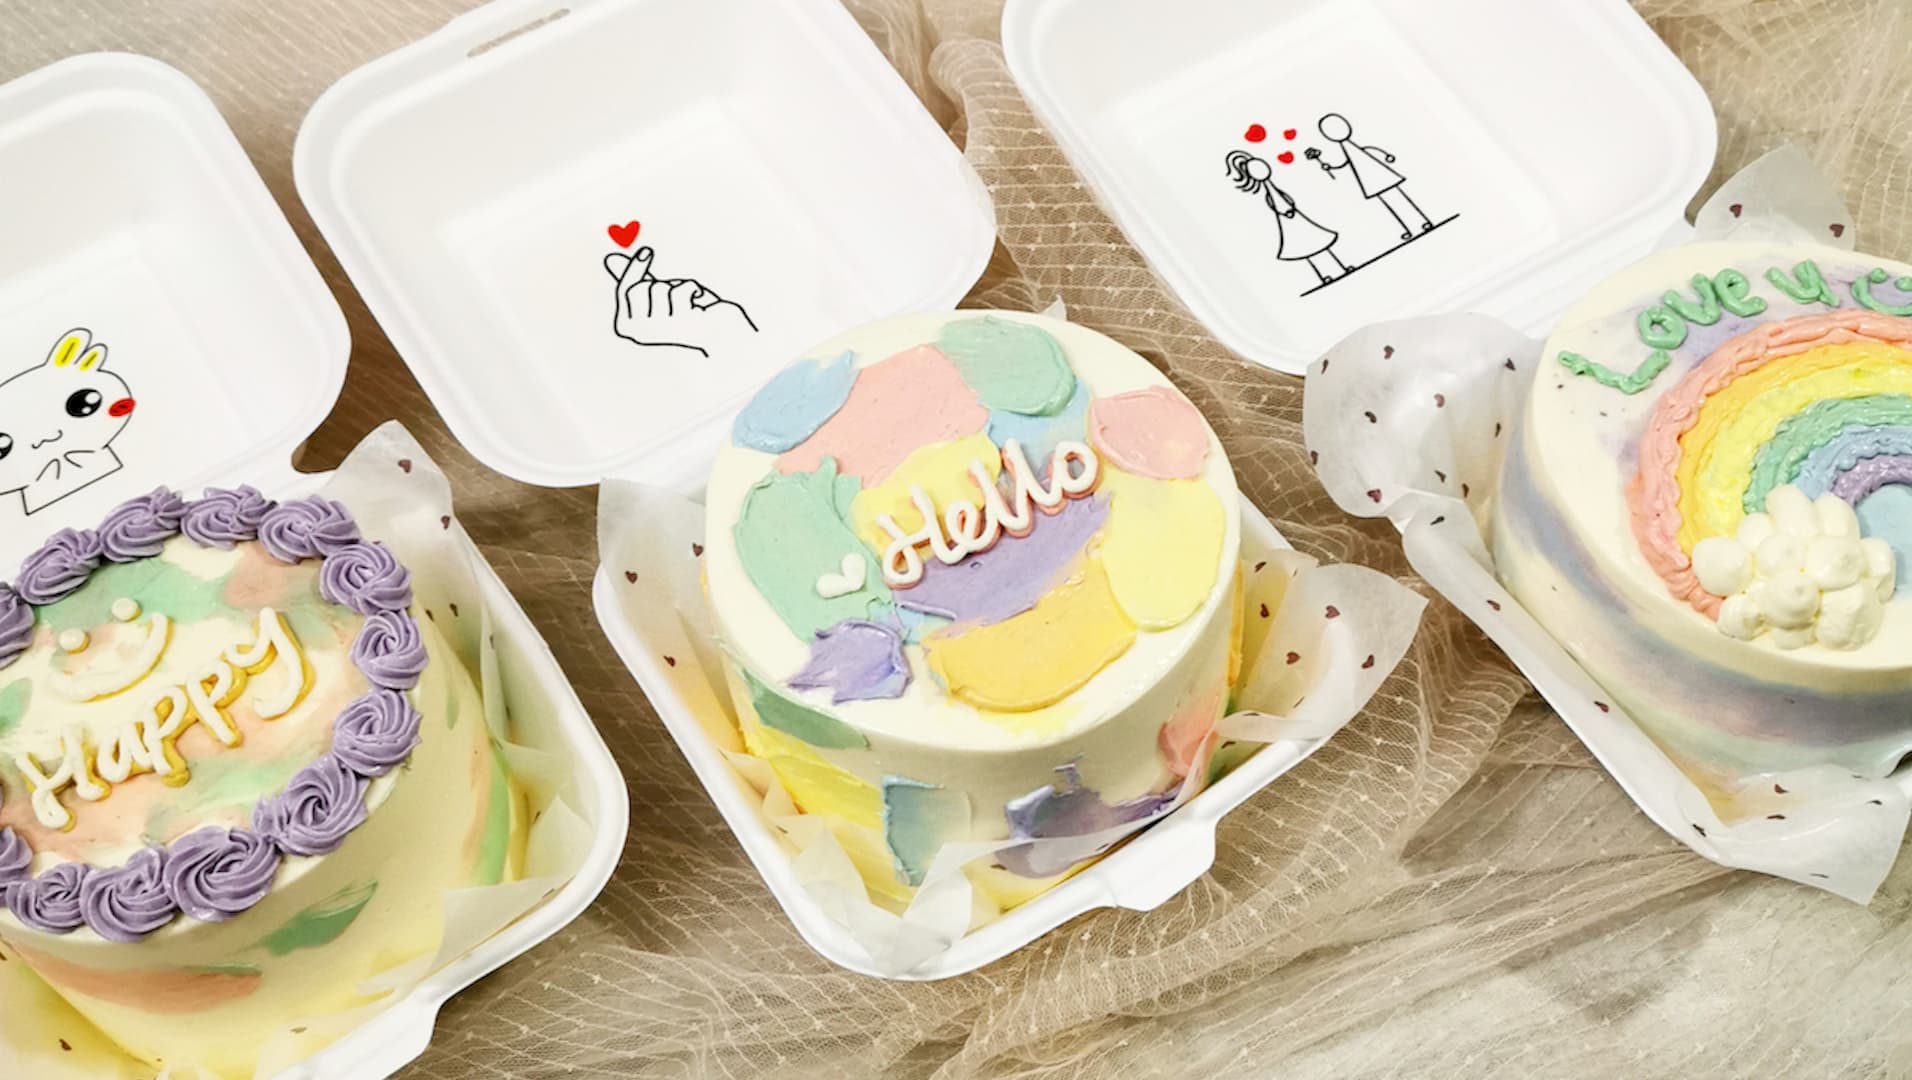 Korean Lunch Box Cake Recipe 